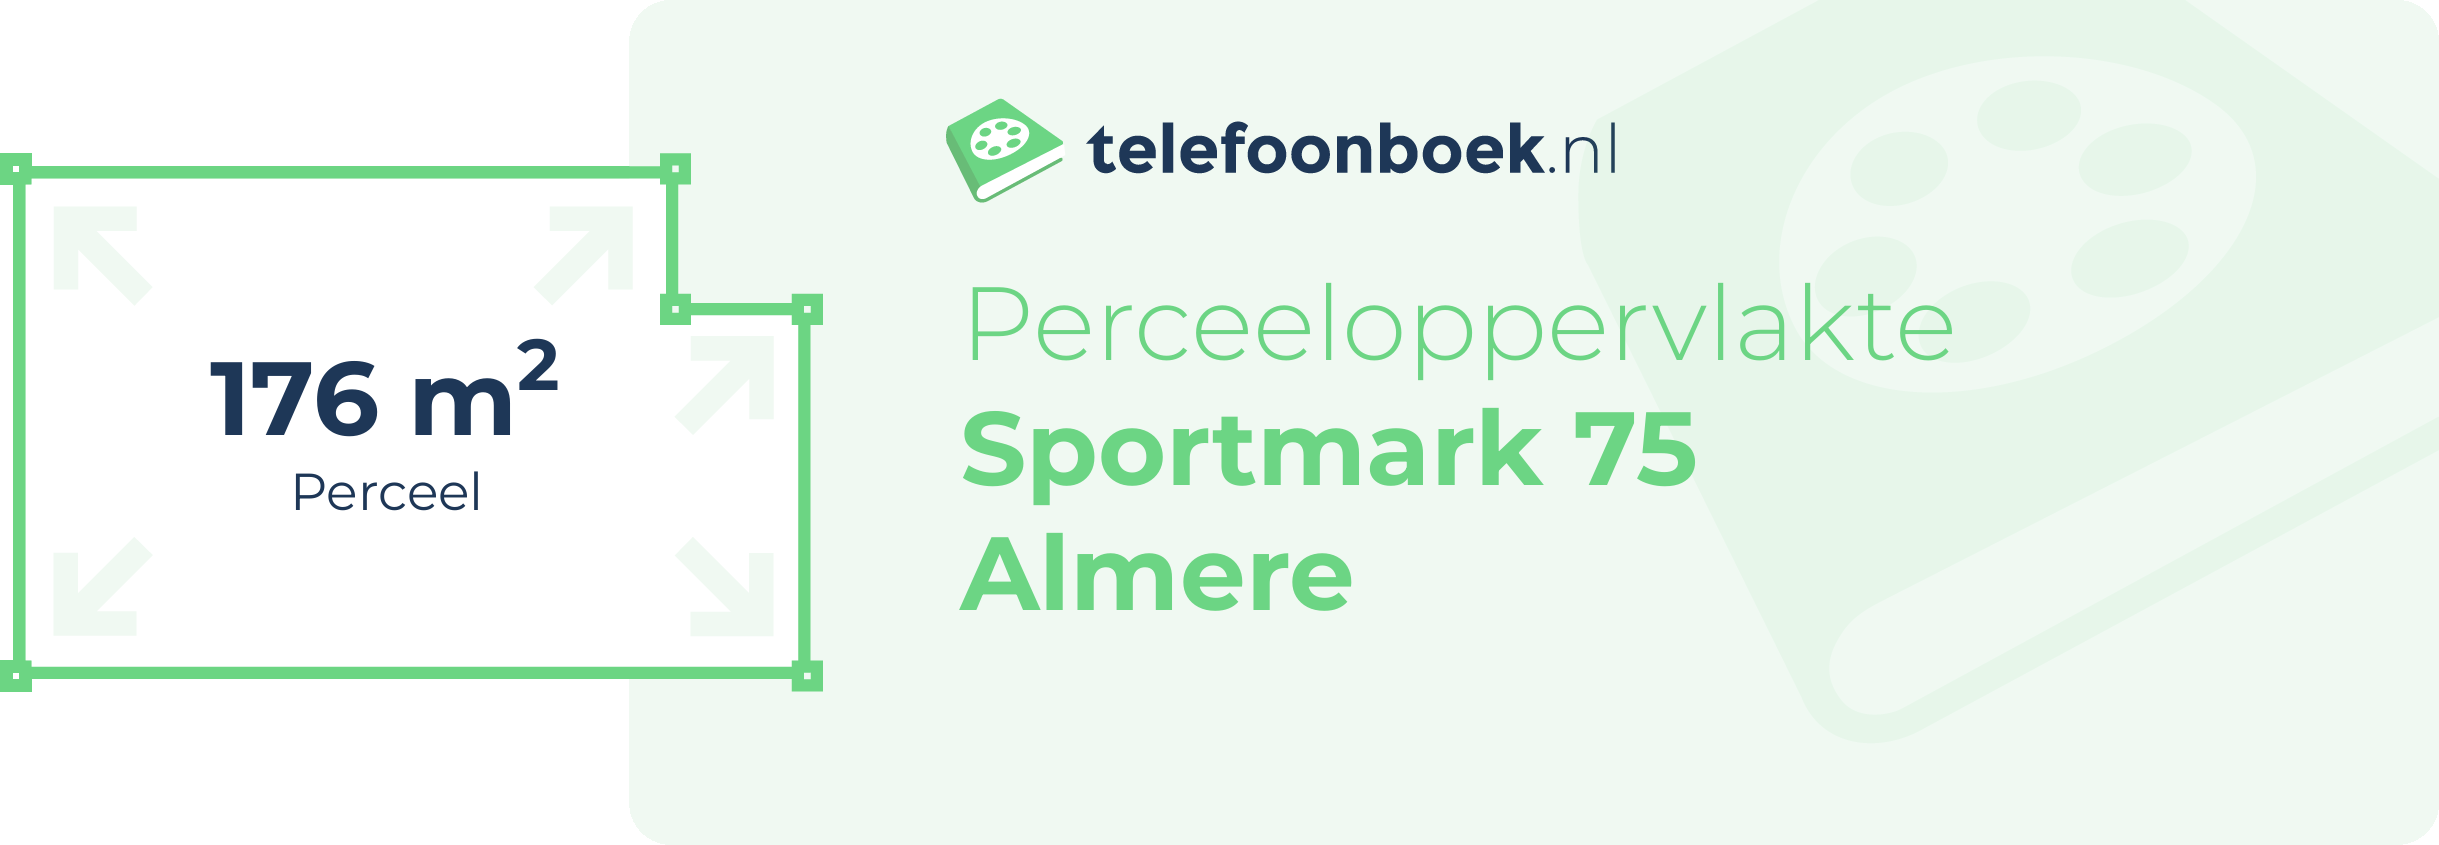 Perceeloppervlakte Sportmark 75 Almere